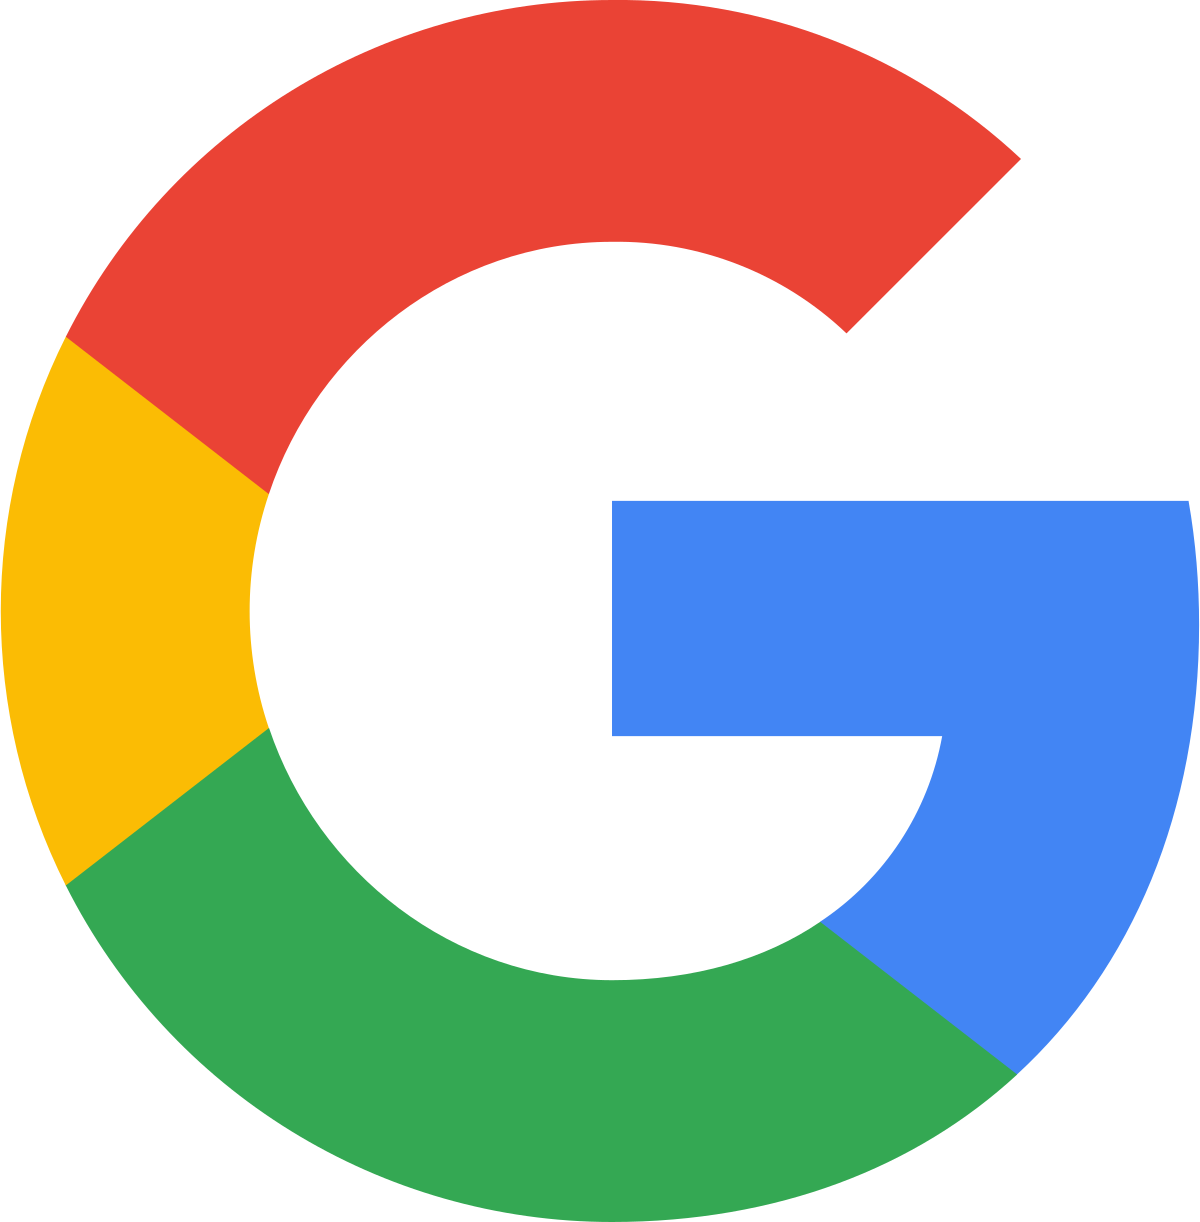 Icono de logotipo de Google PNG imagen Transparente